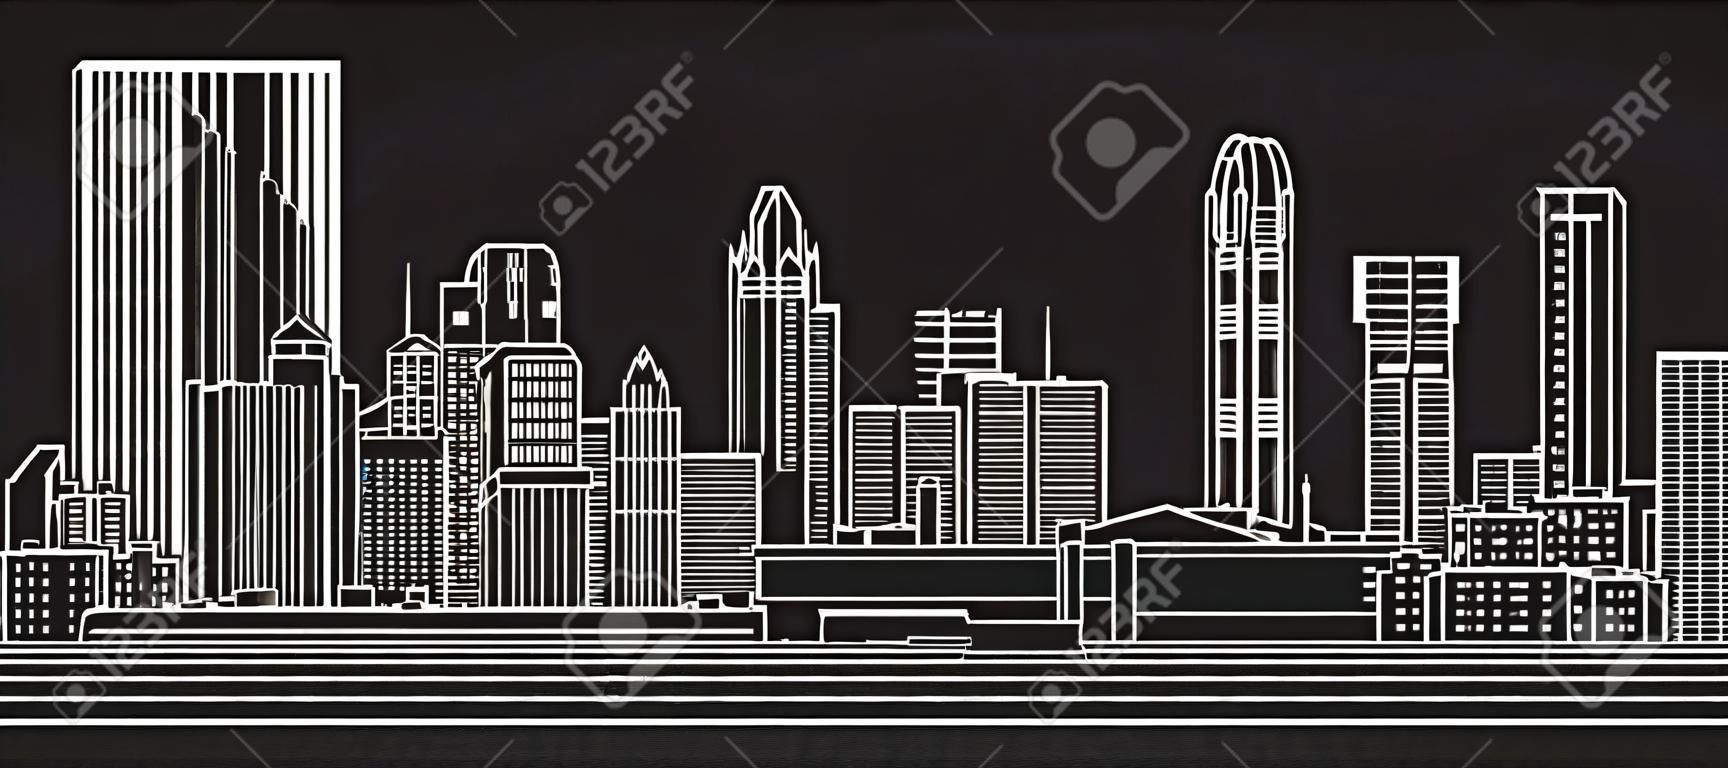 Cityscape Building Line art Illustration design - Pittsburgh City